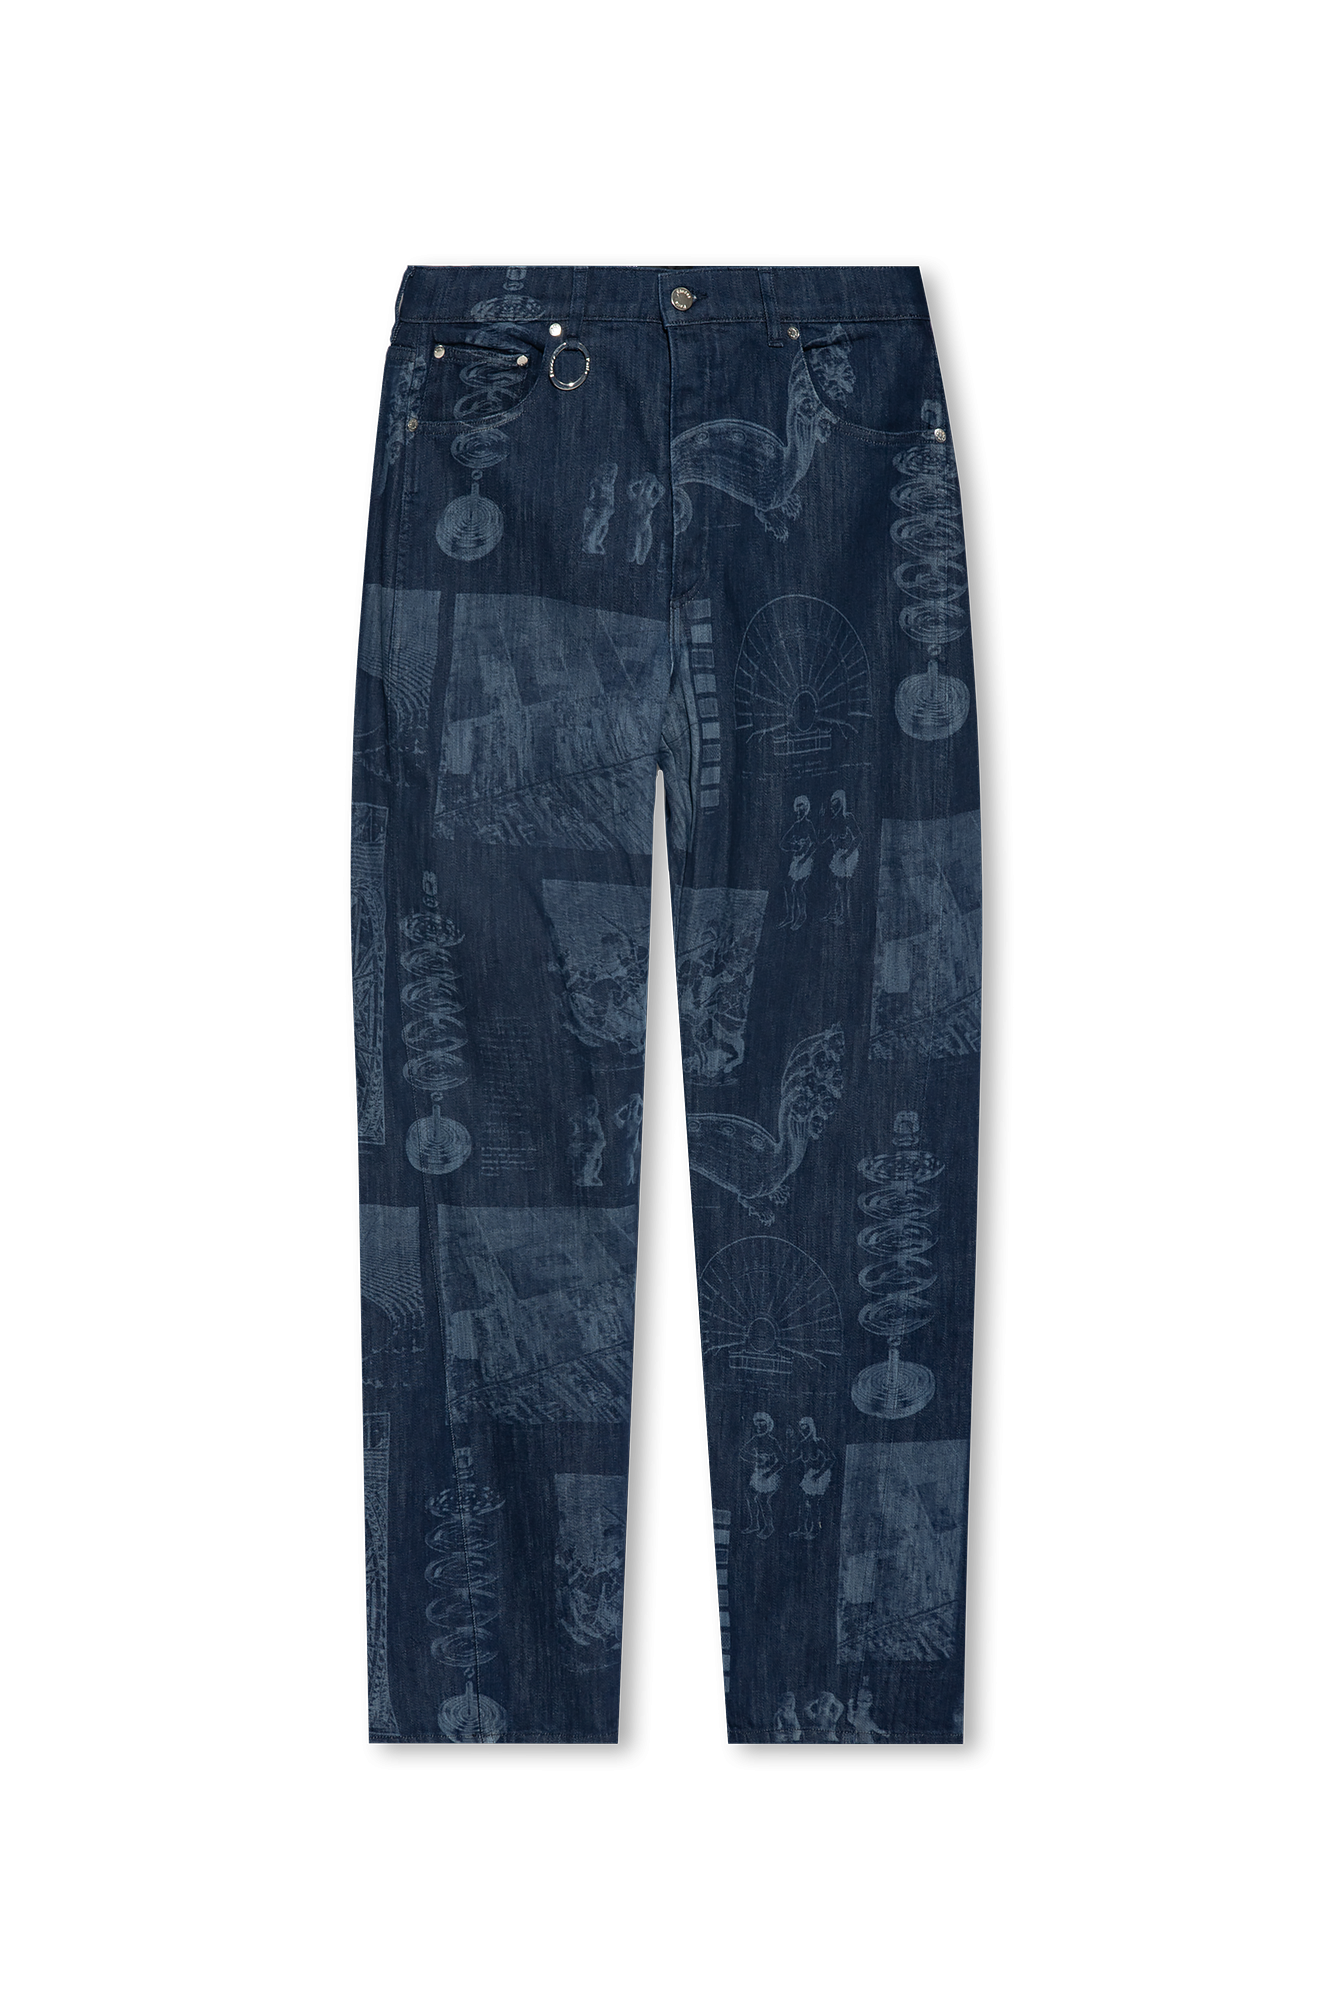 Blue Patterned jeans Etudes - GenesinlifeShops KR - RSQ Mens Relaxed Taper  Dark Jeans